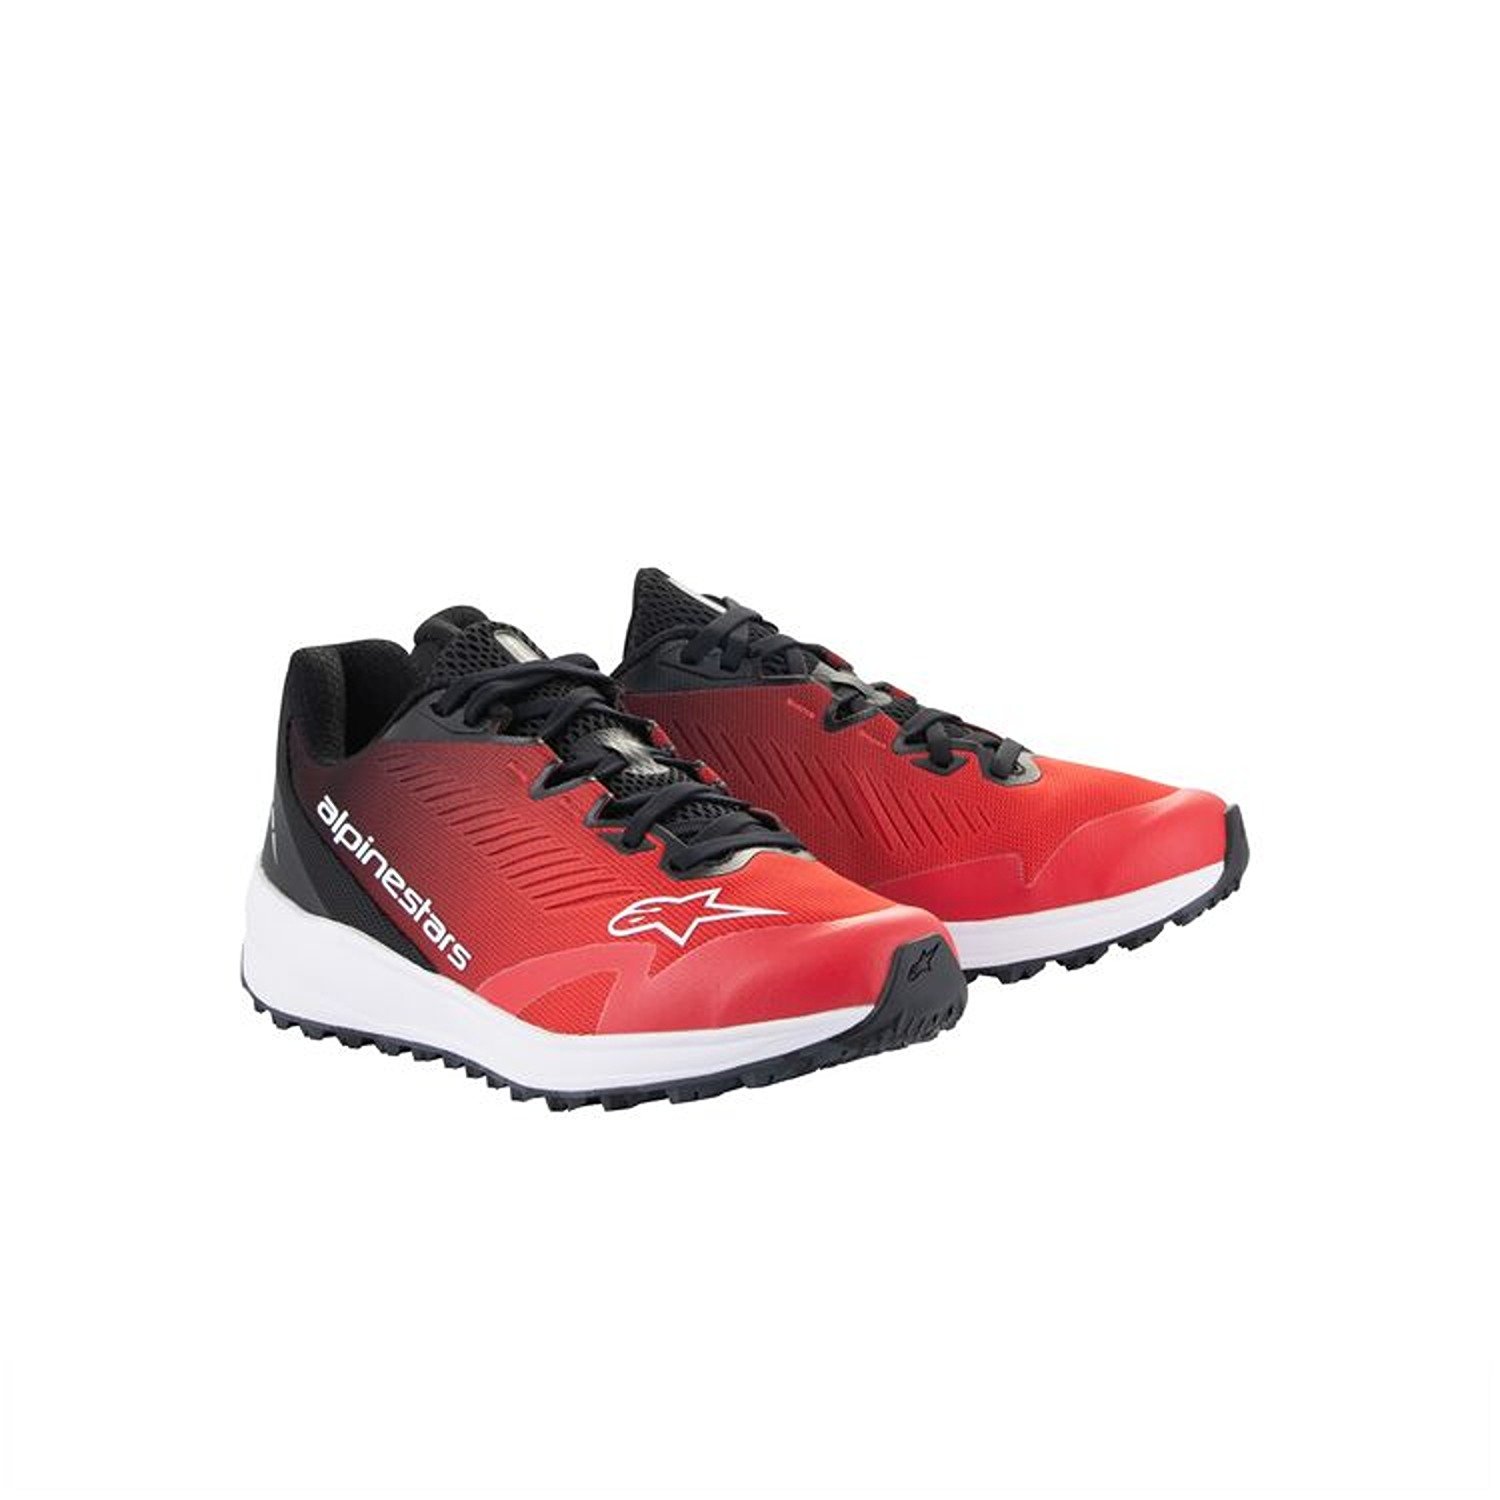 Image of Alpinestars Meta Road V2 Shoes Red Black White Size US 9 EN